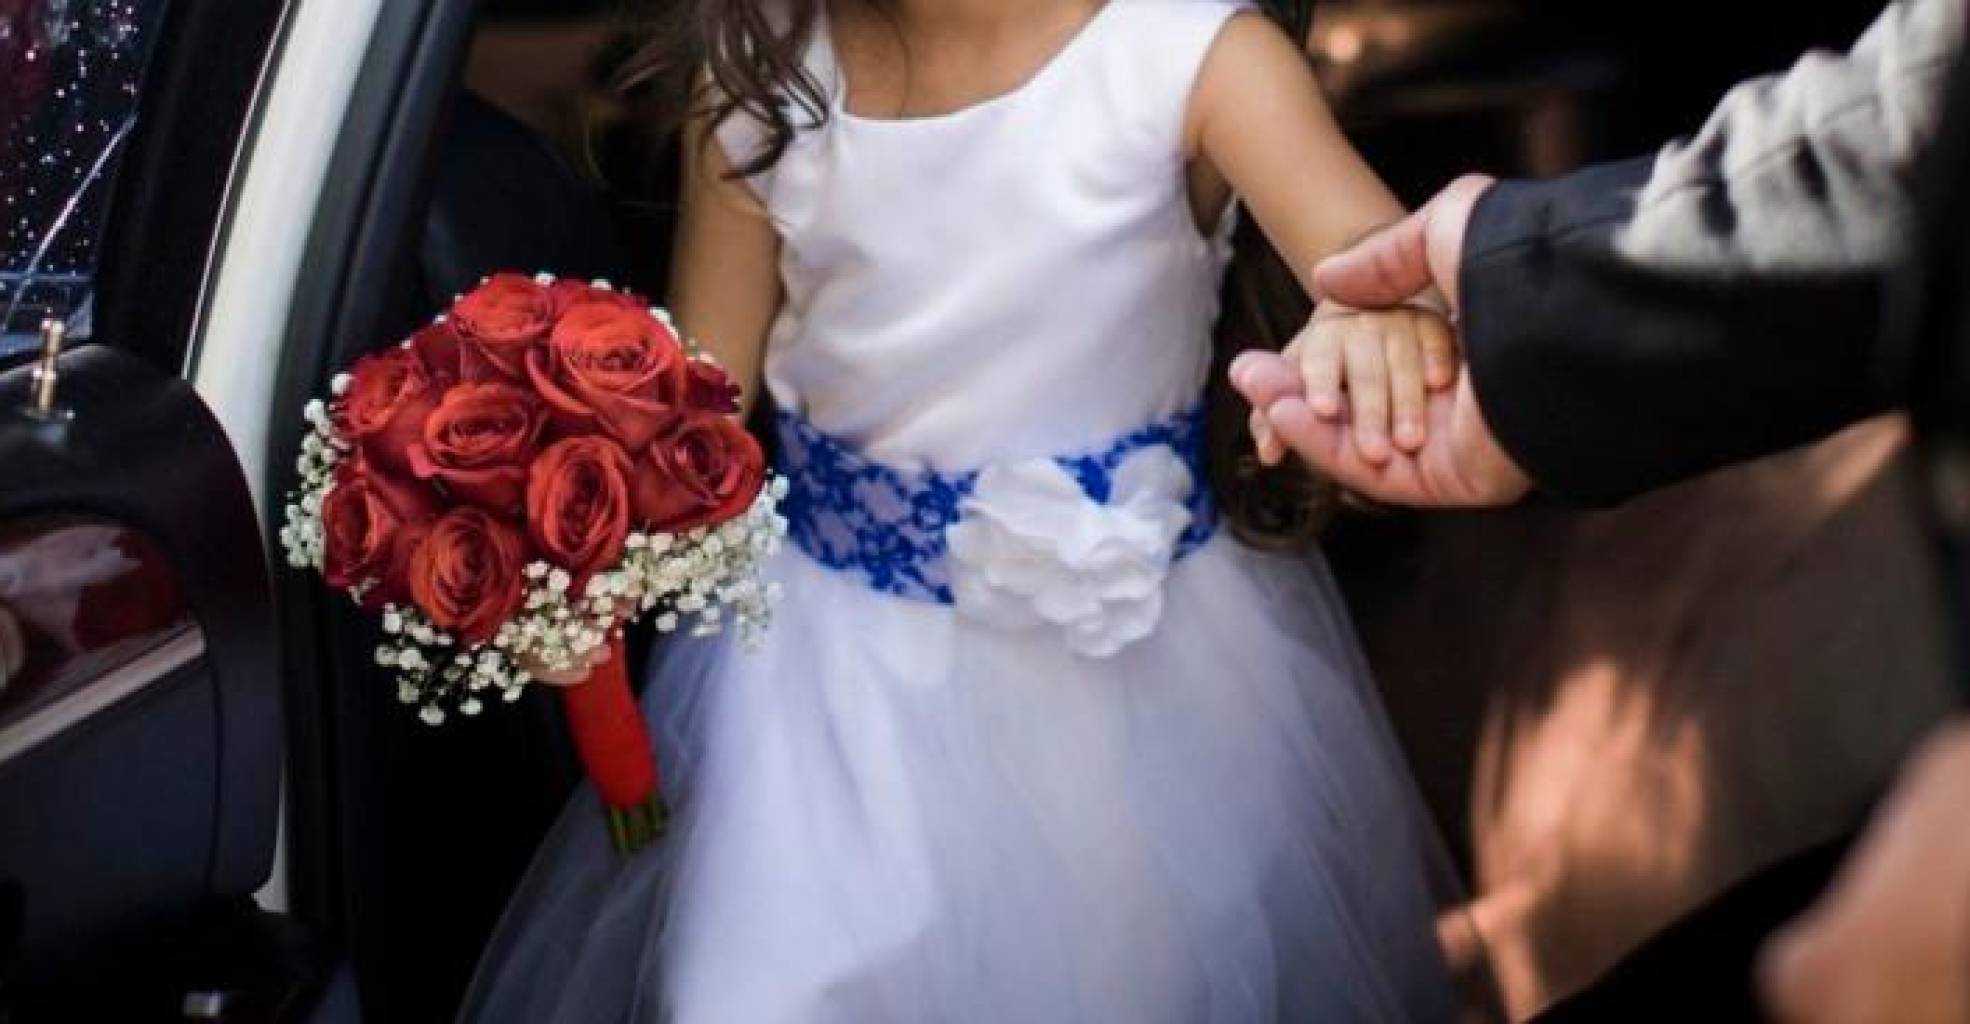 Matrimonio infantil aumentó en un 49 % en Venezuela durante la pandemia, según encuesta de la ONG